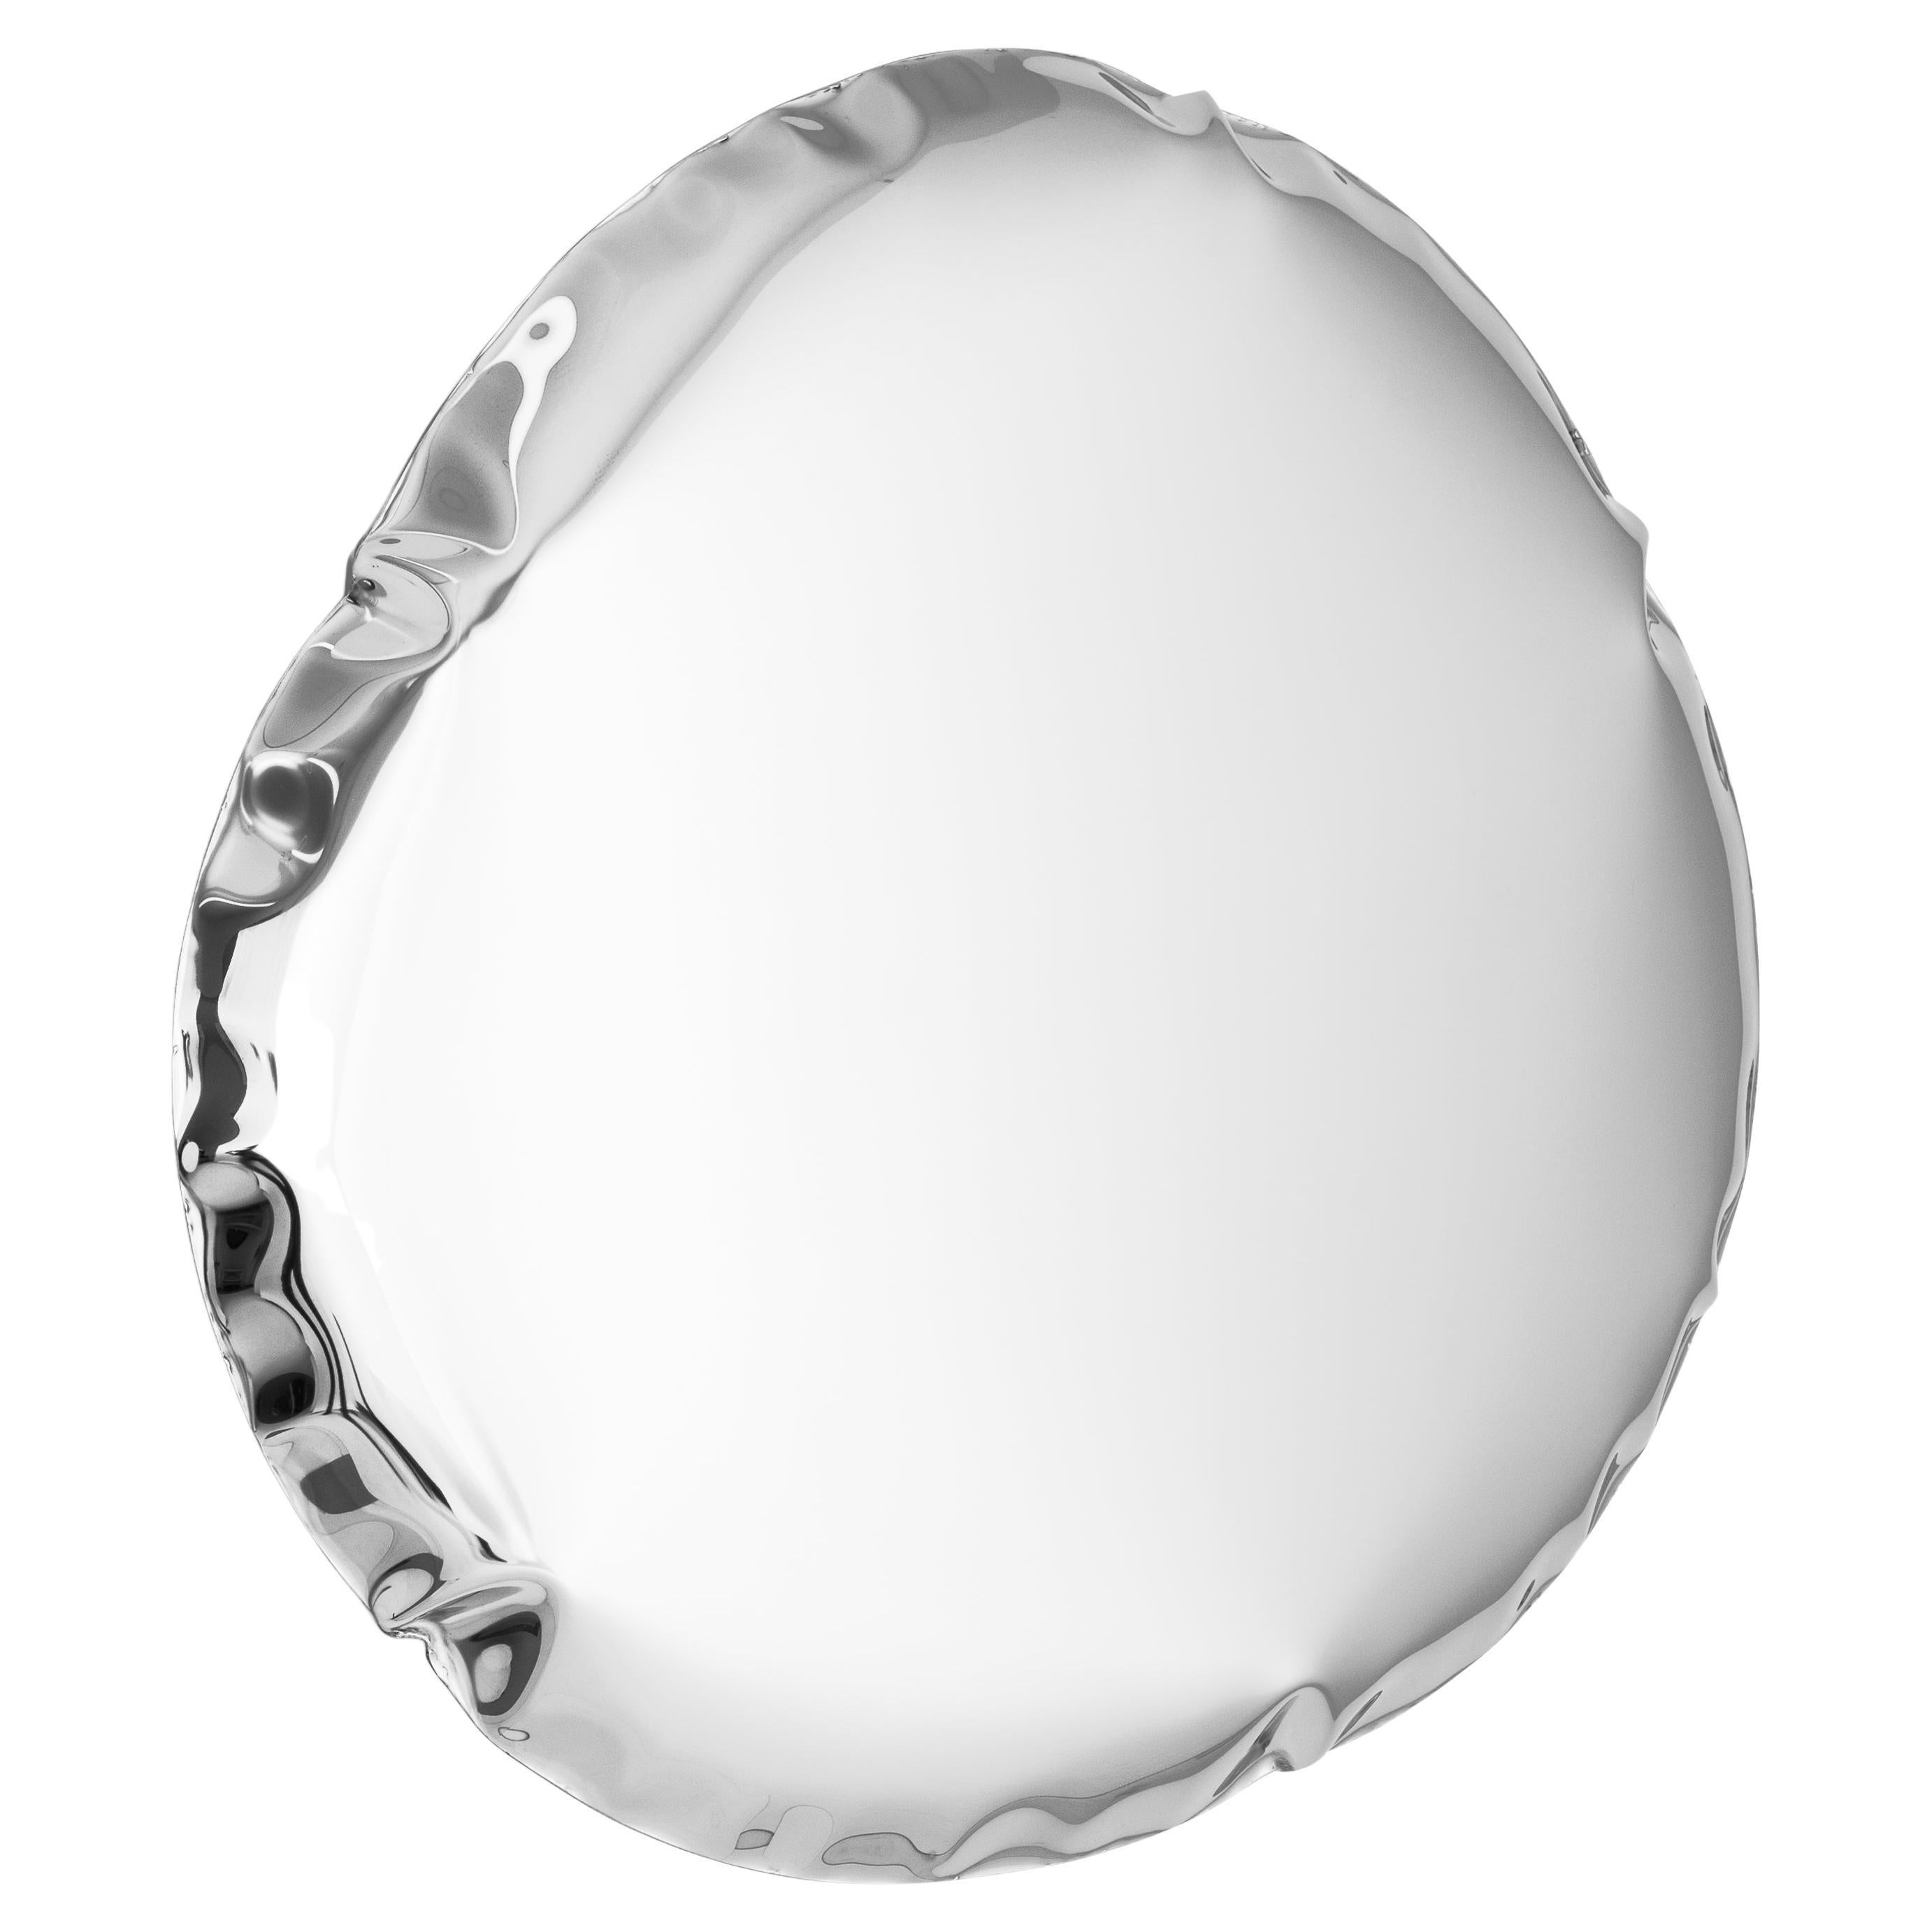 Stainless Steel Tafla O6 Wall Mirror by Zieta For Sale